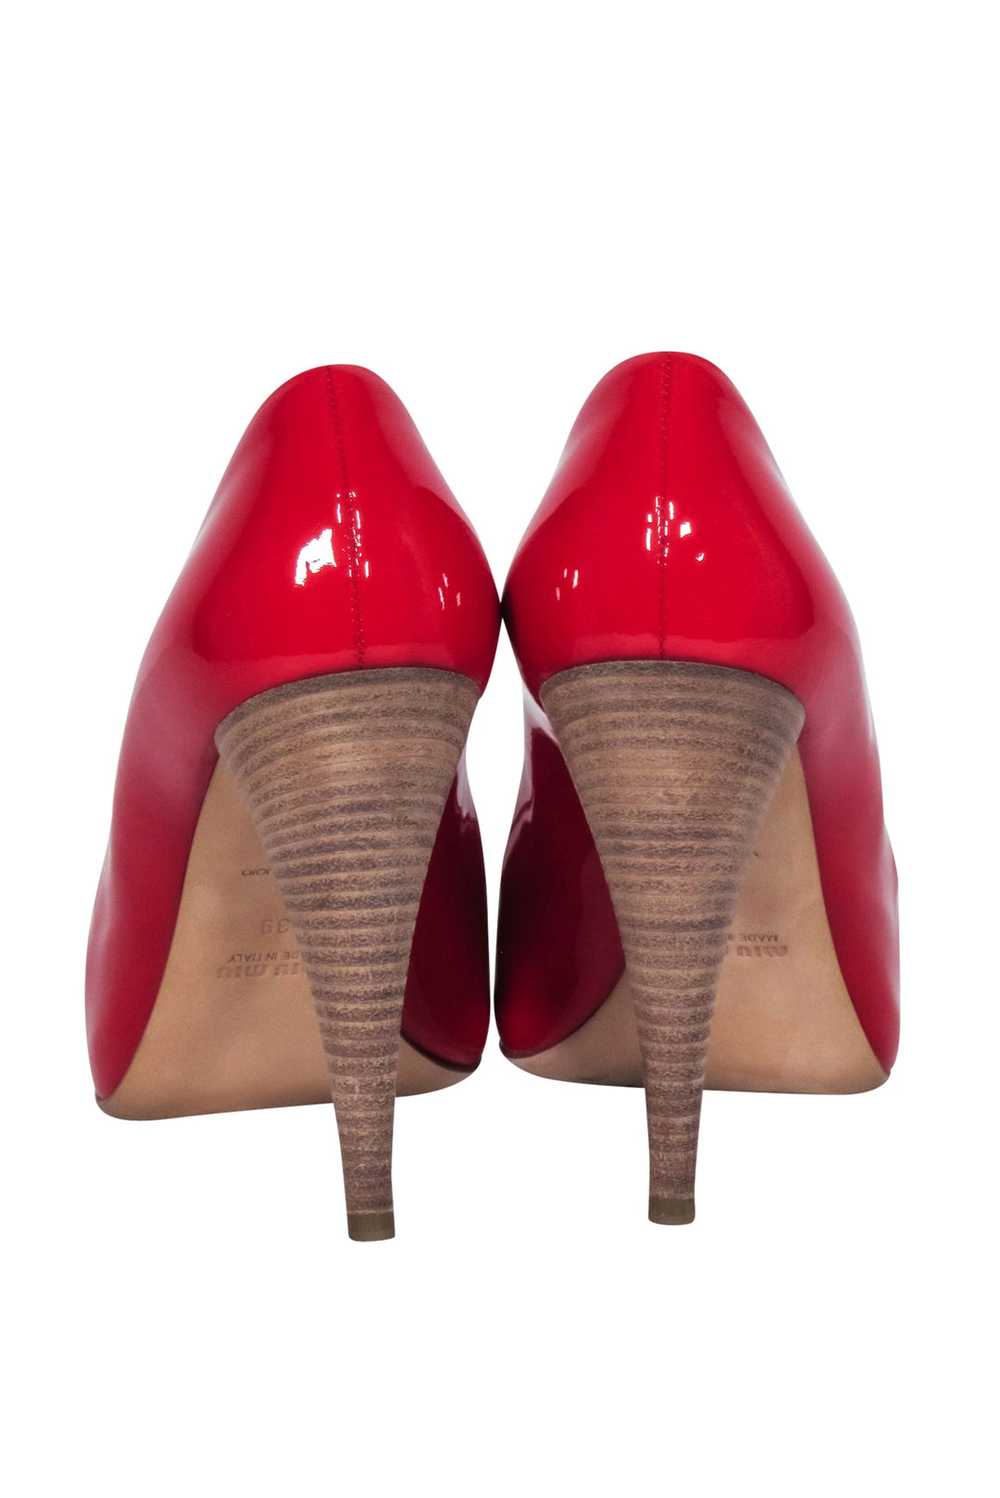 Miu Miu - Red Patent Leather Peep Toe Pumps Sz 9 - image 4